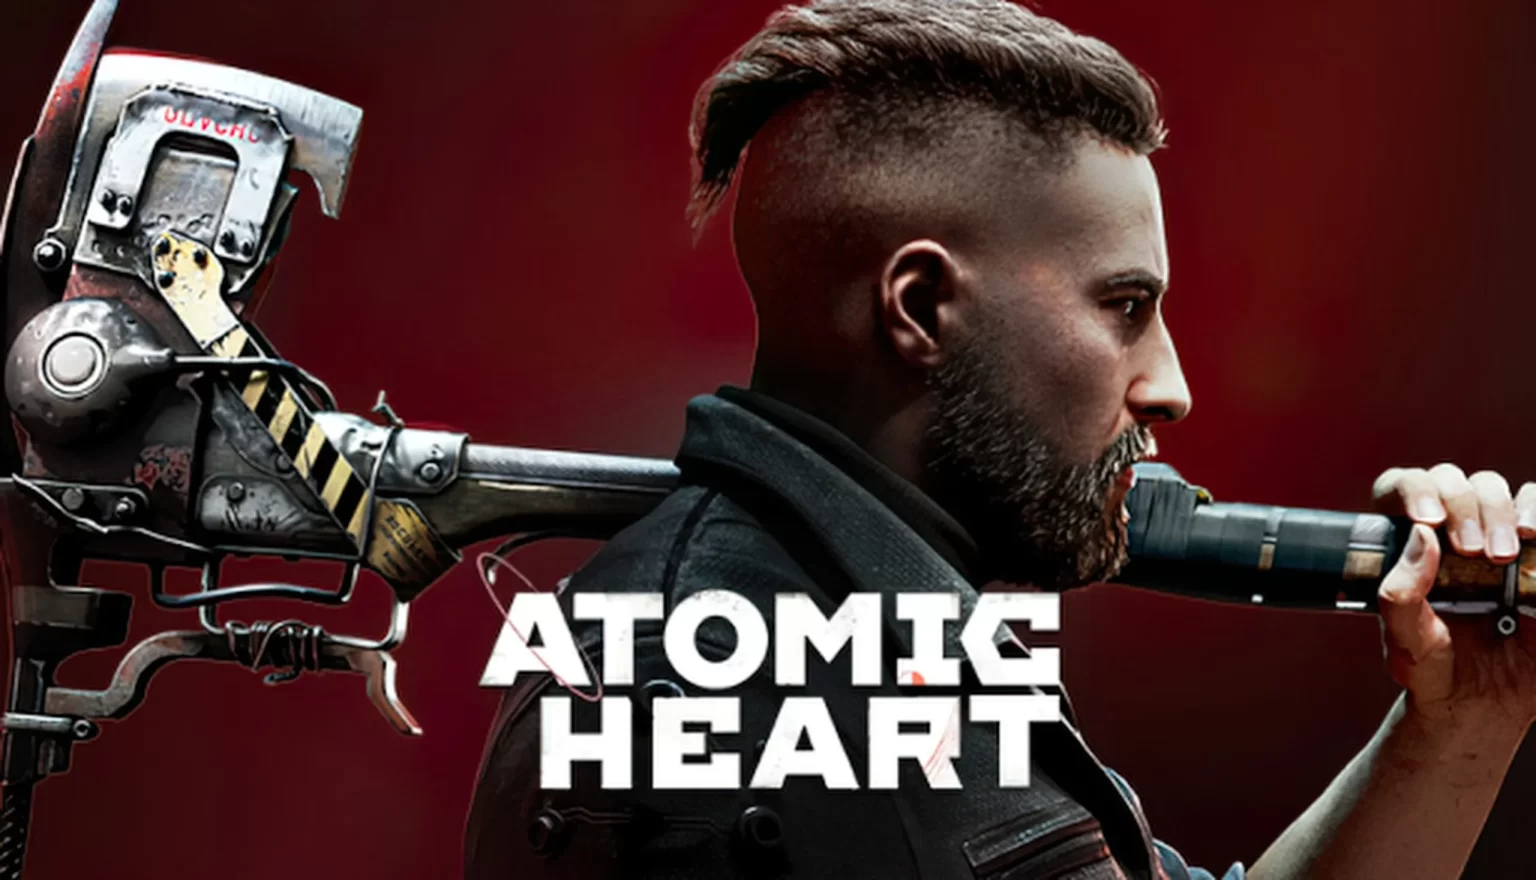 Atomic-Heart-1536x880.webp